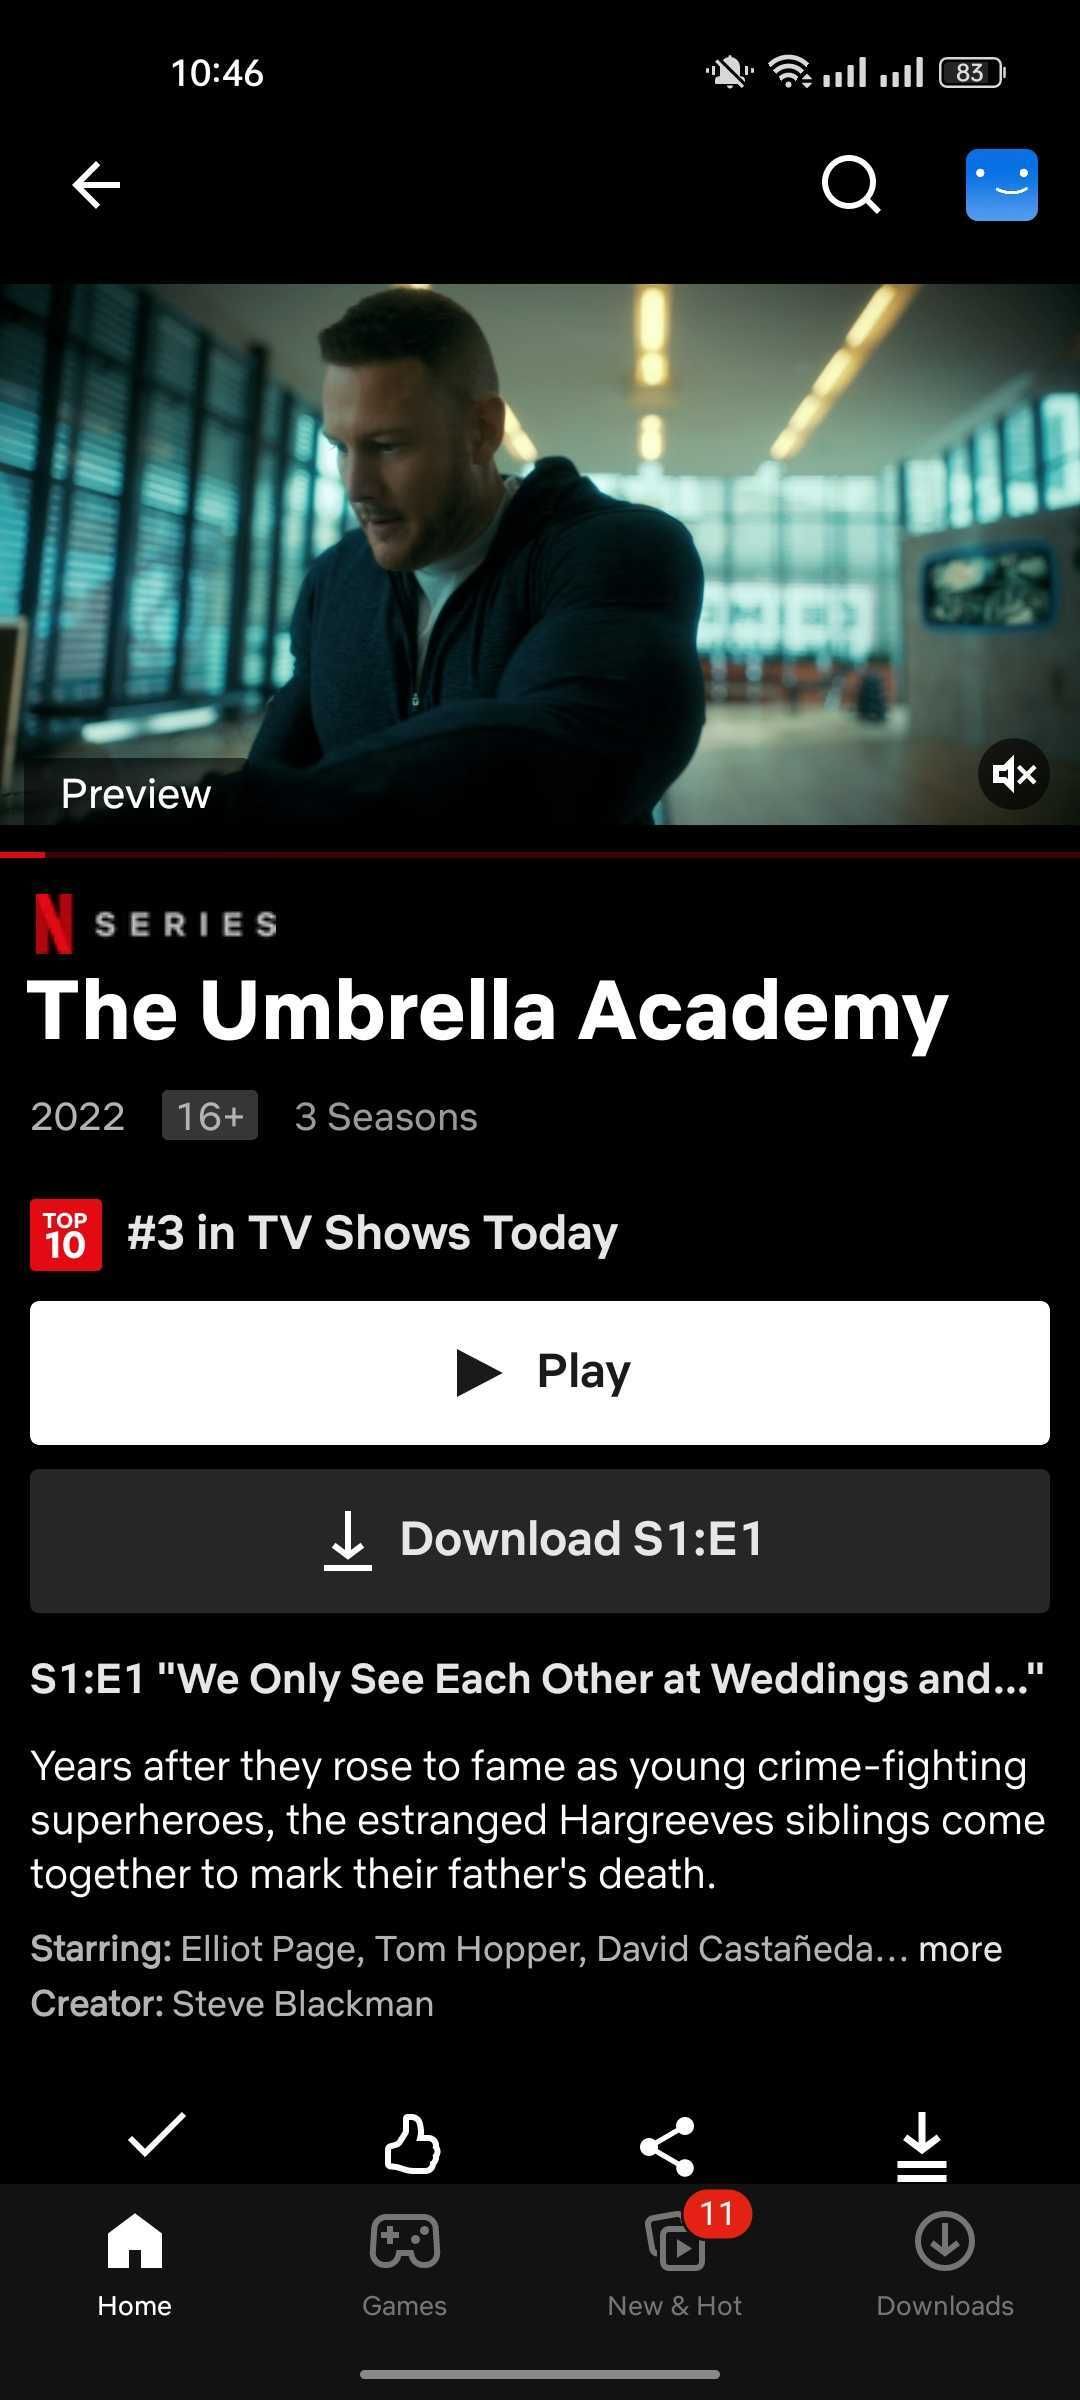 The Umbrella Academy show on Netflix